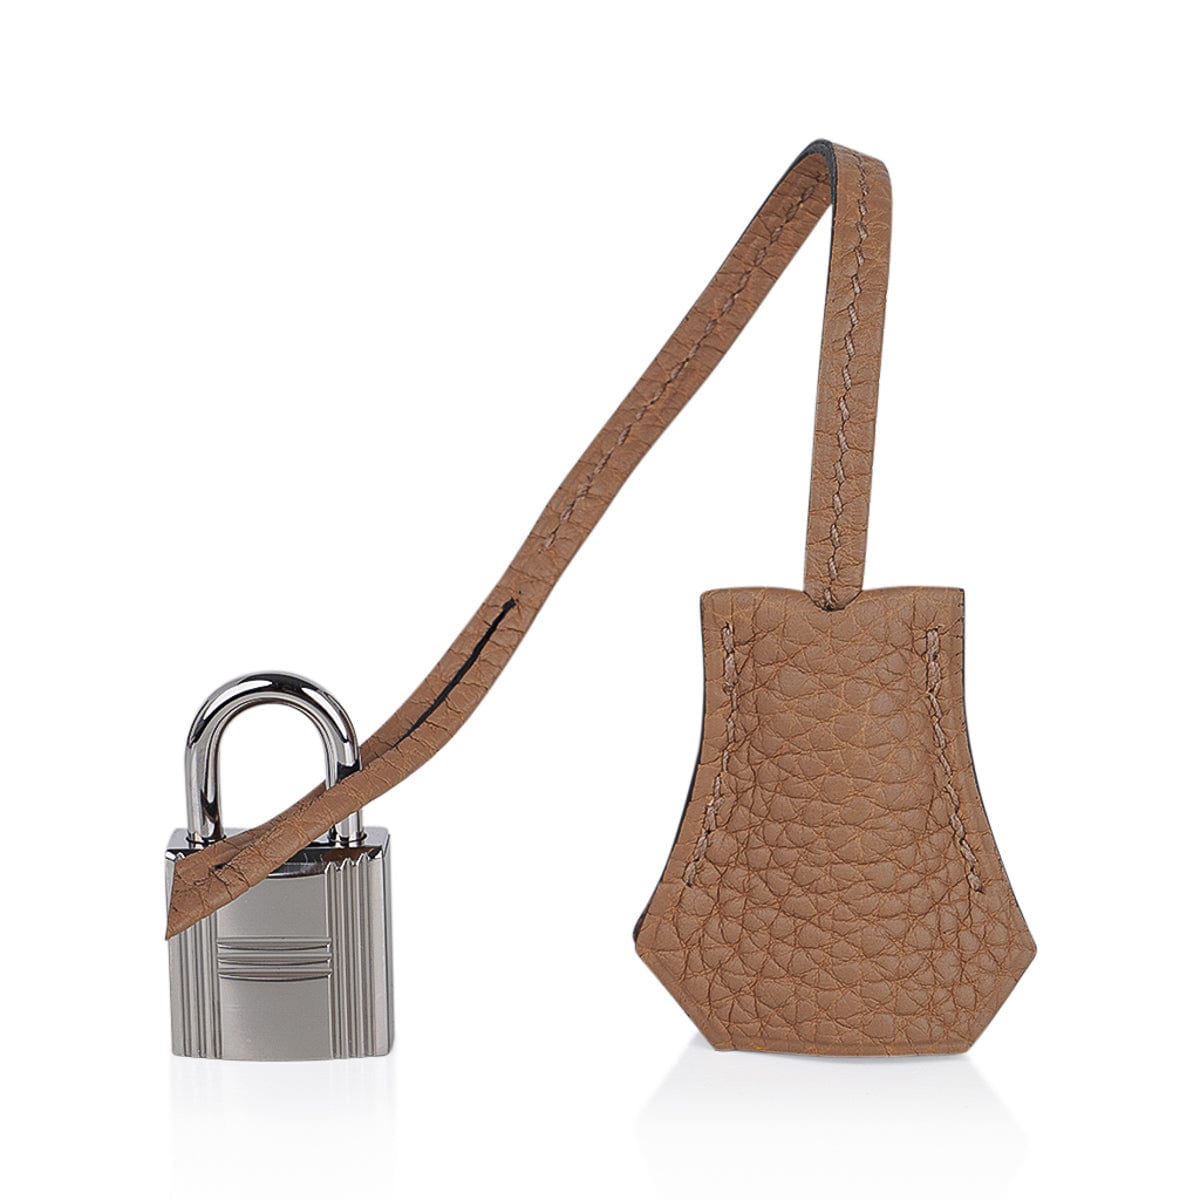 Hermès Birkin 25 Togo Leather Handbag